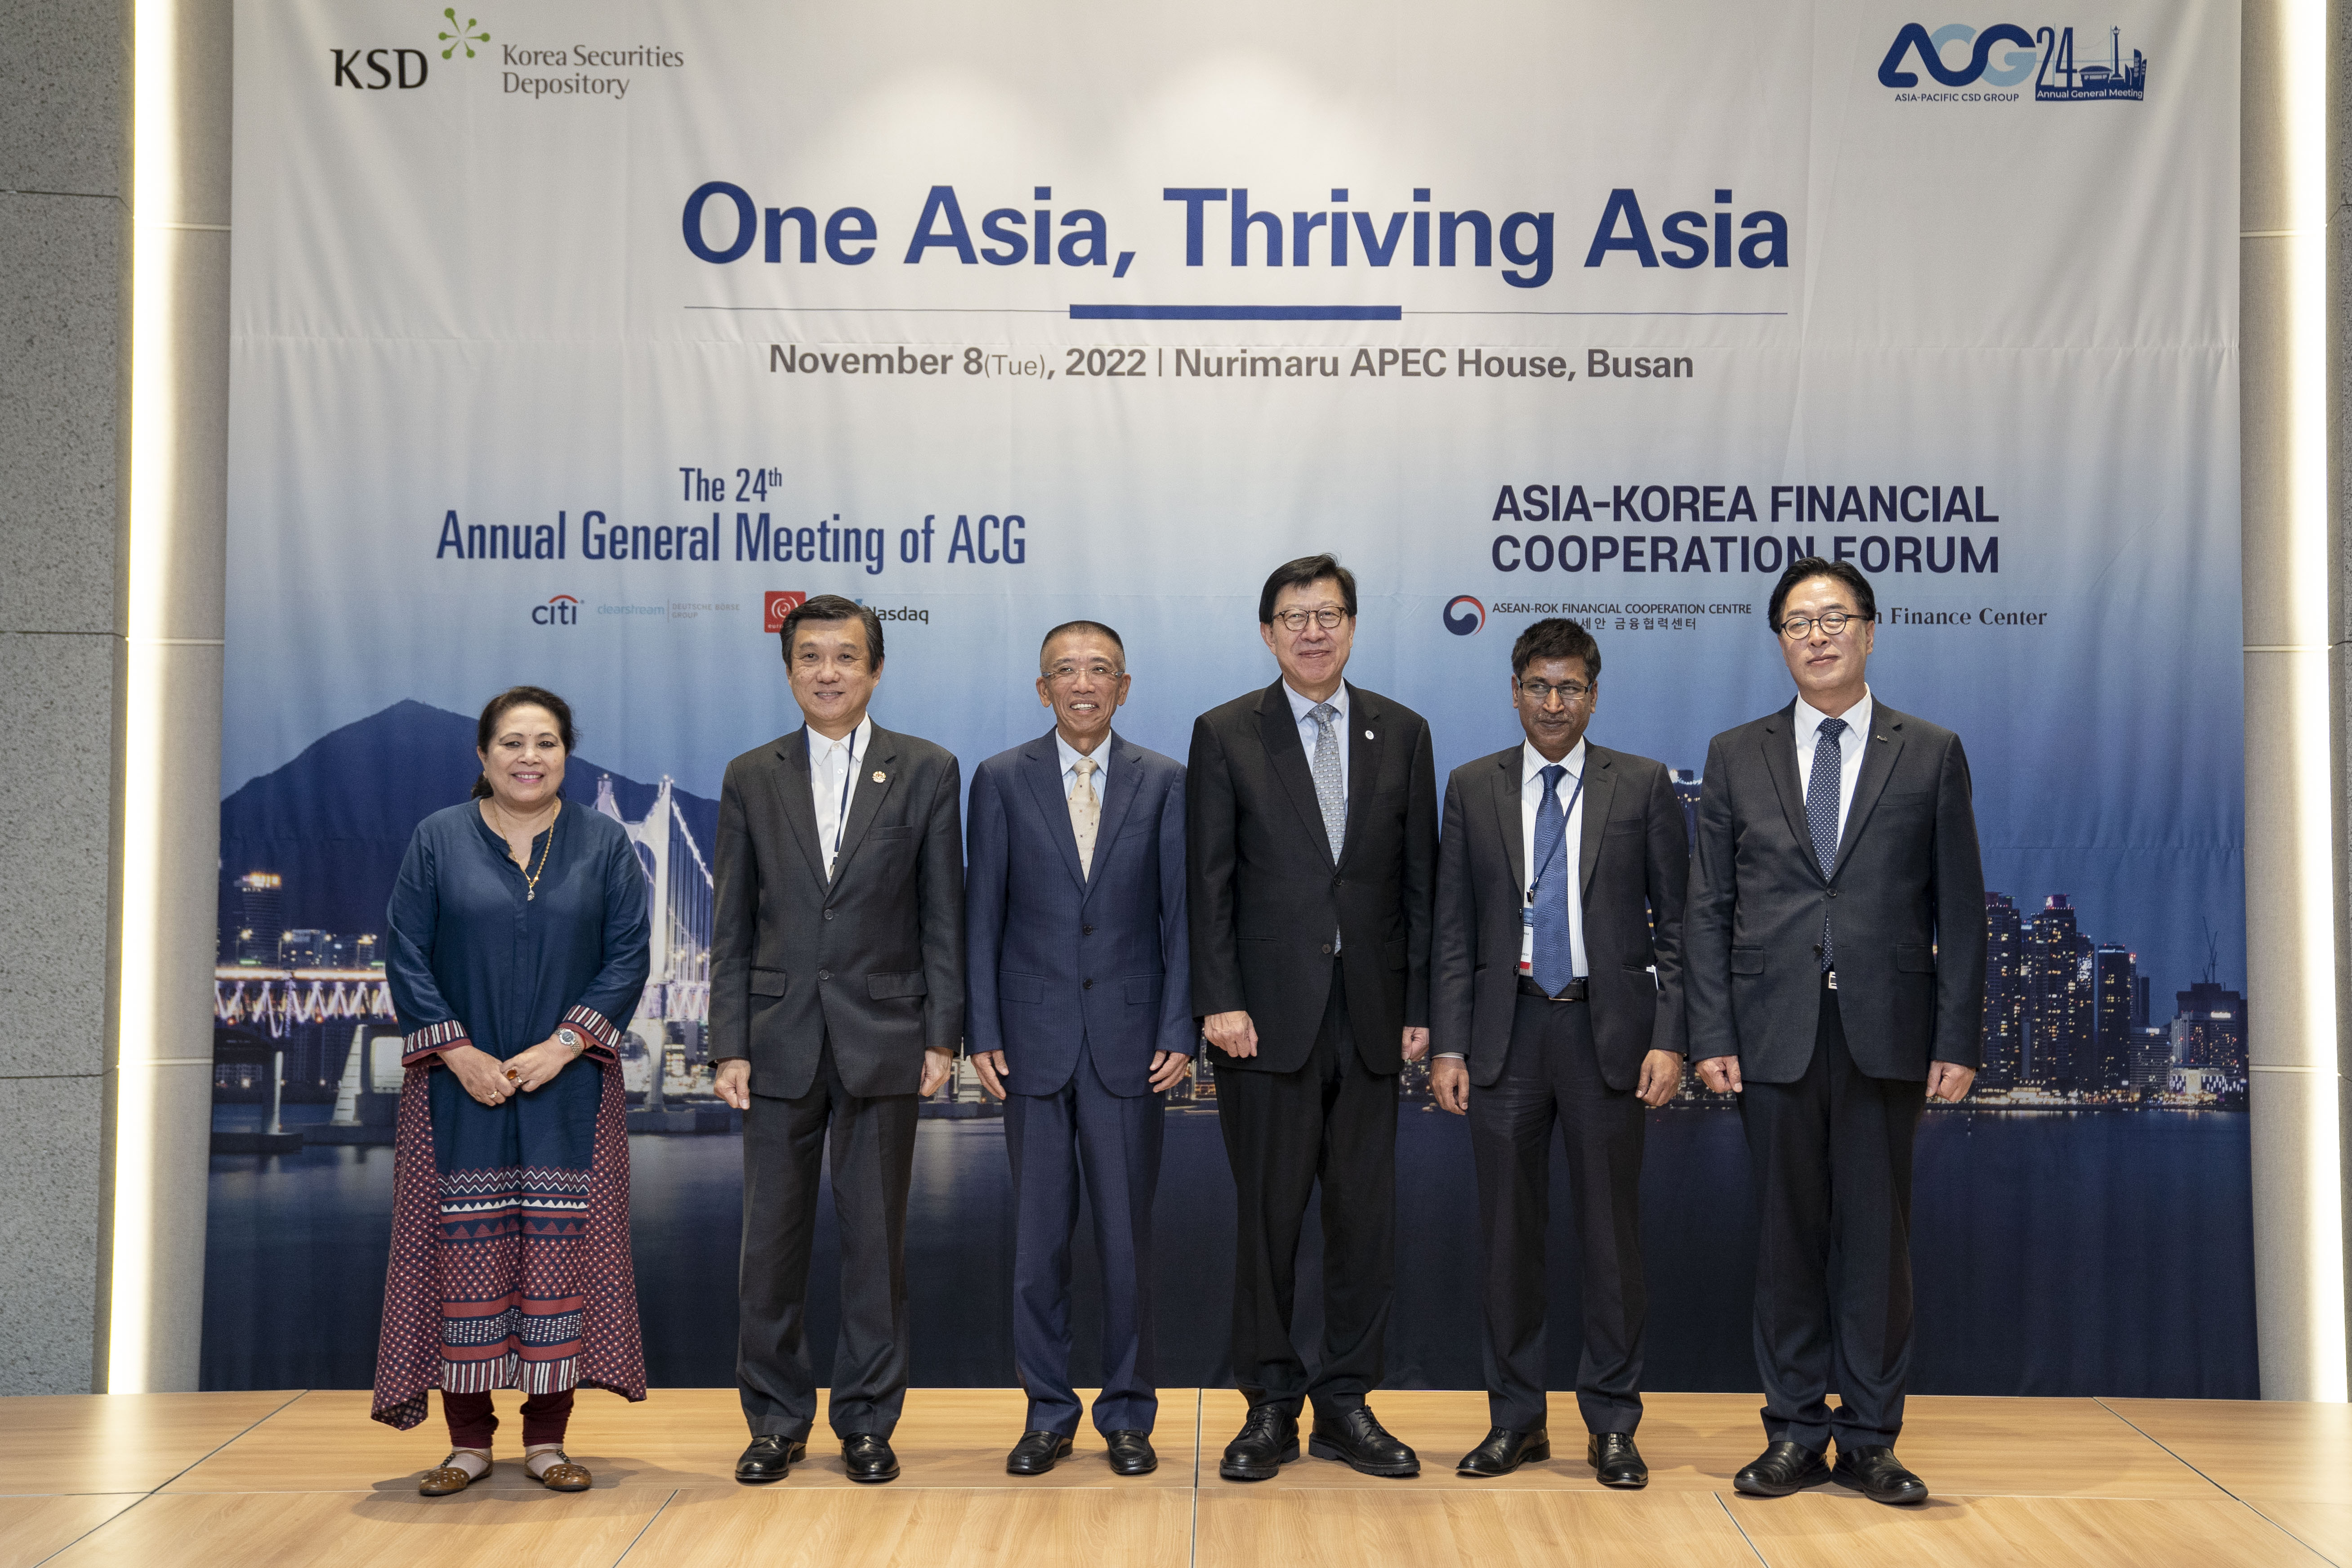 20221108 On Asia, Thriving Asia 금융기관장 대상 엑스포 유치 홍보 리셉션 (APEC 누리마루) 사진11